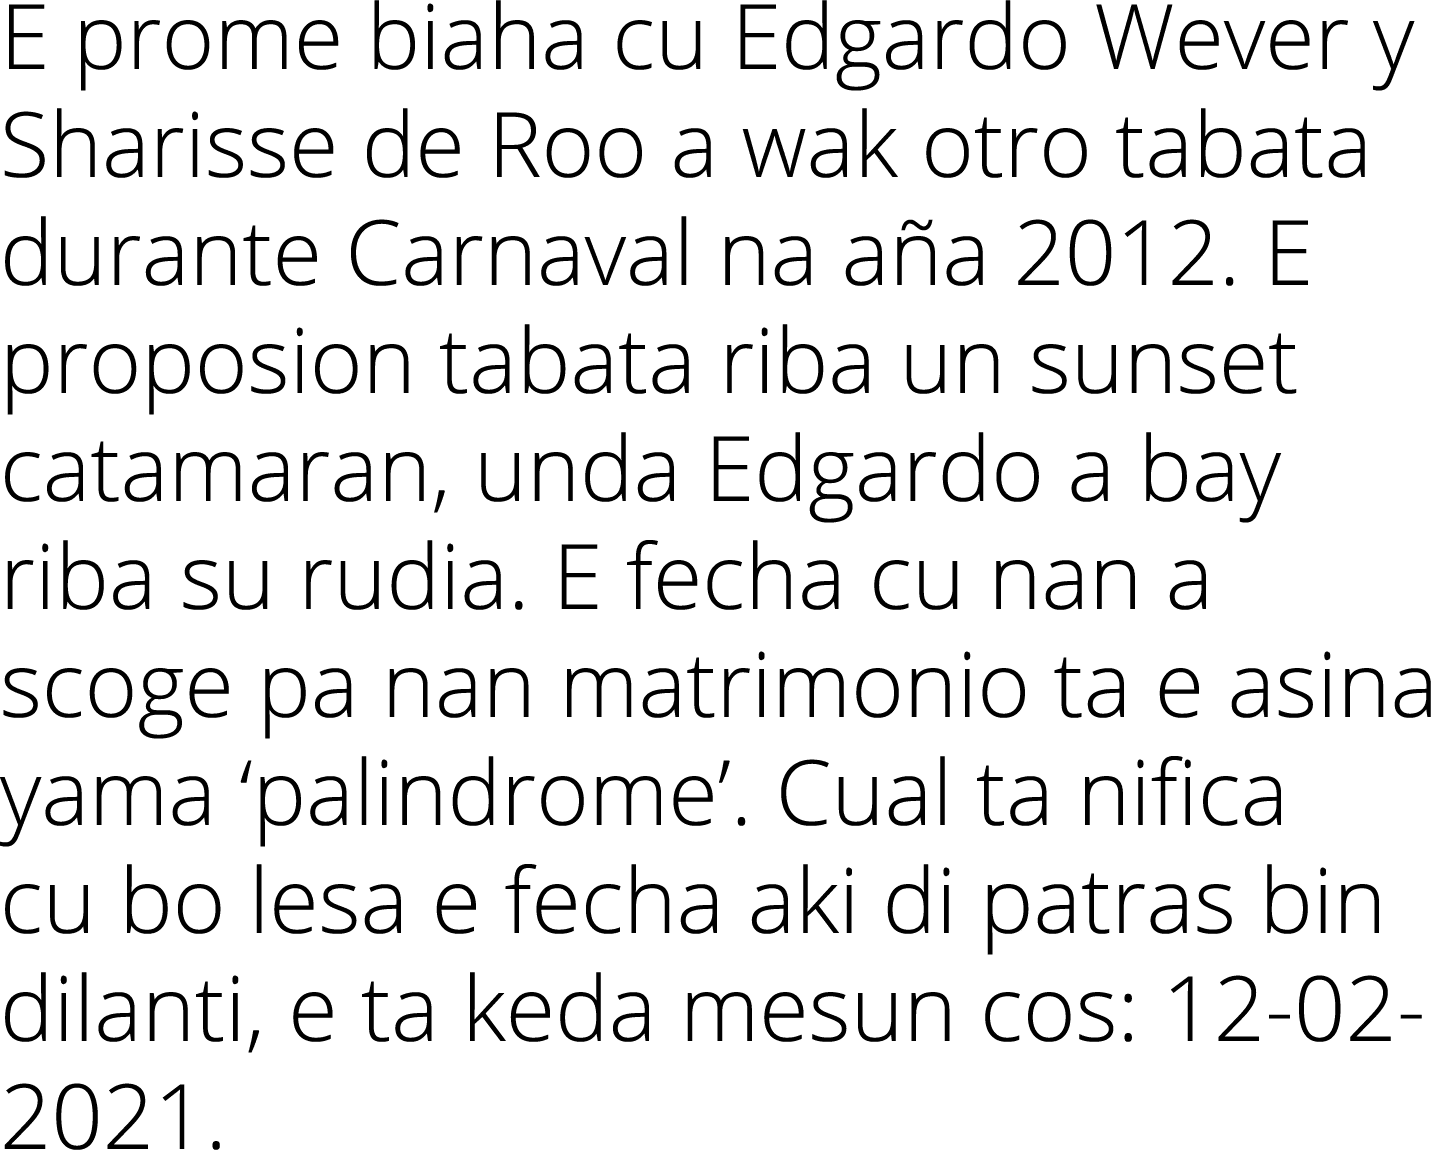 E prome biaha cu Edgardo Wever y Sharisse de Roo a wak otro tabata durante Carnaval na aña 2012  E proposion tabata r   